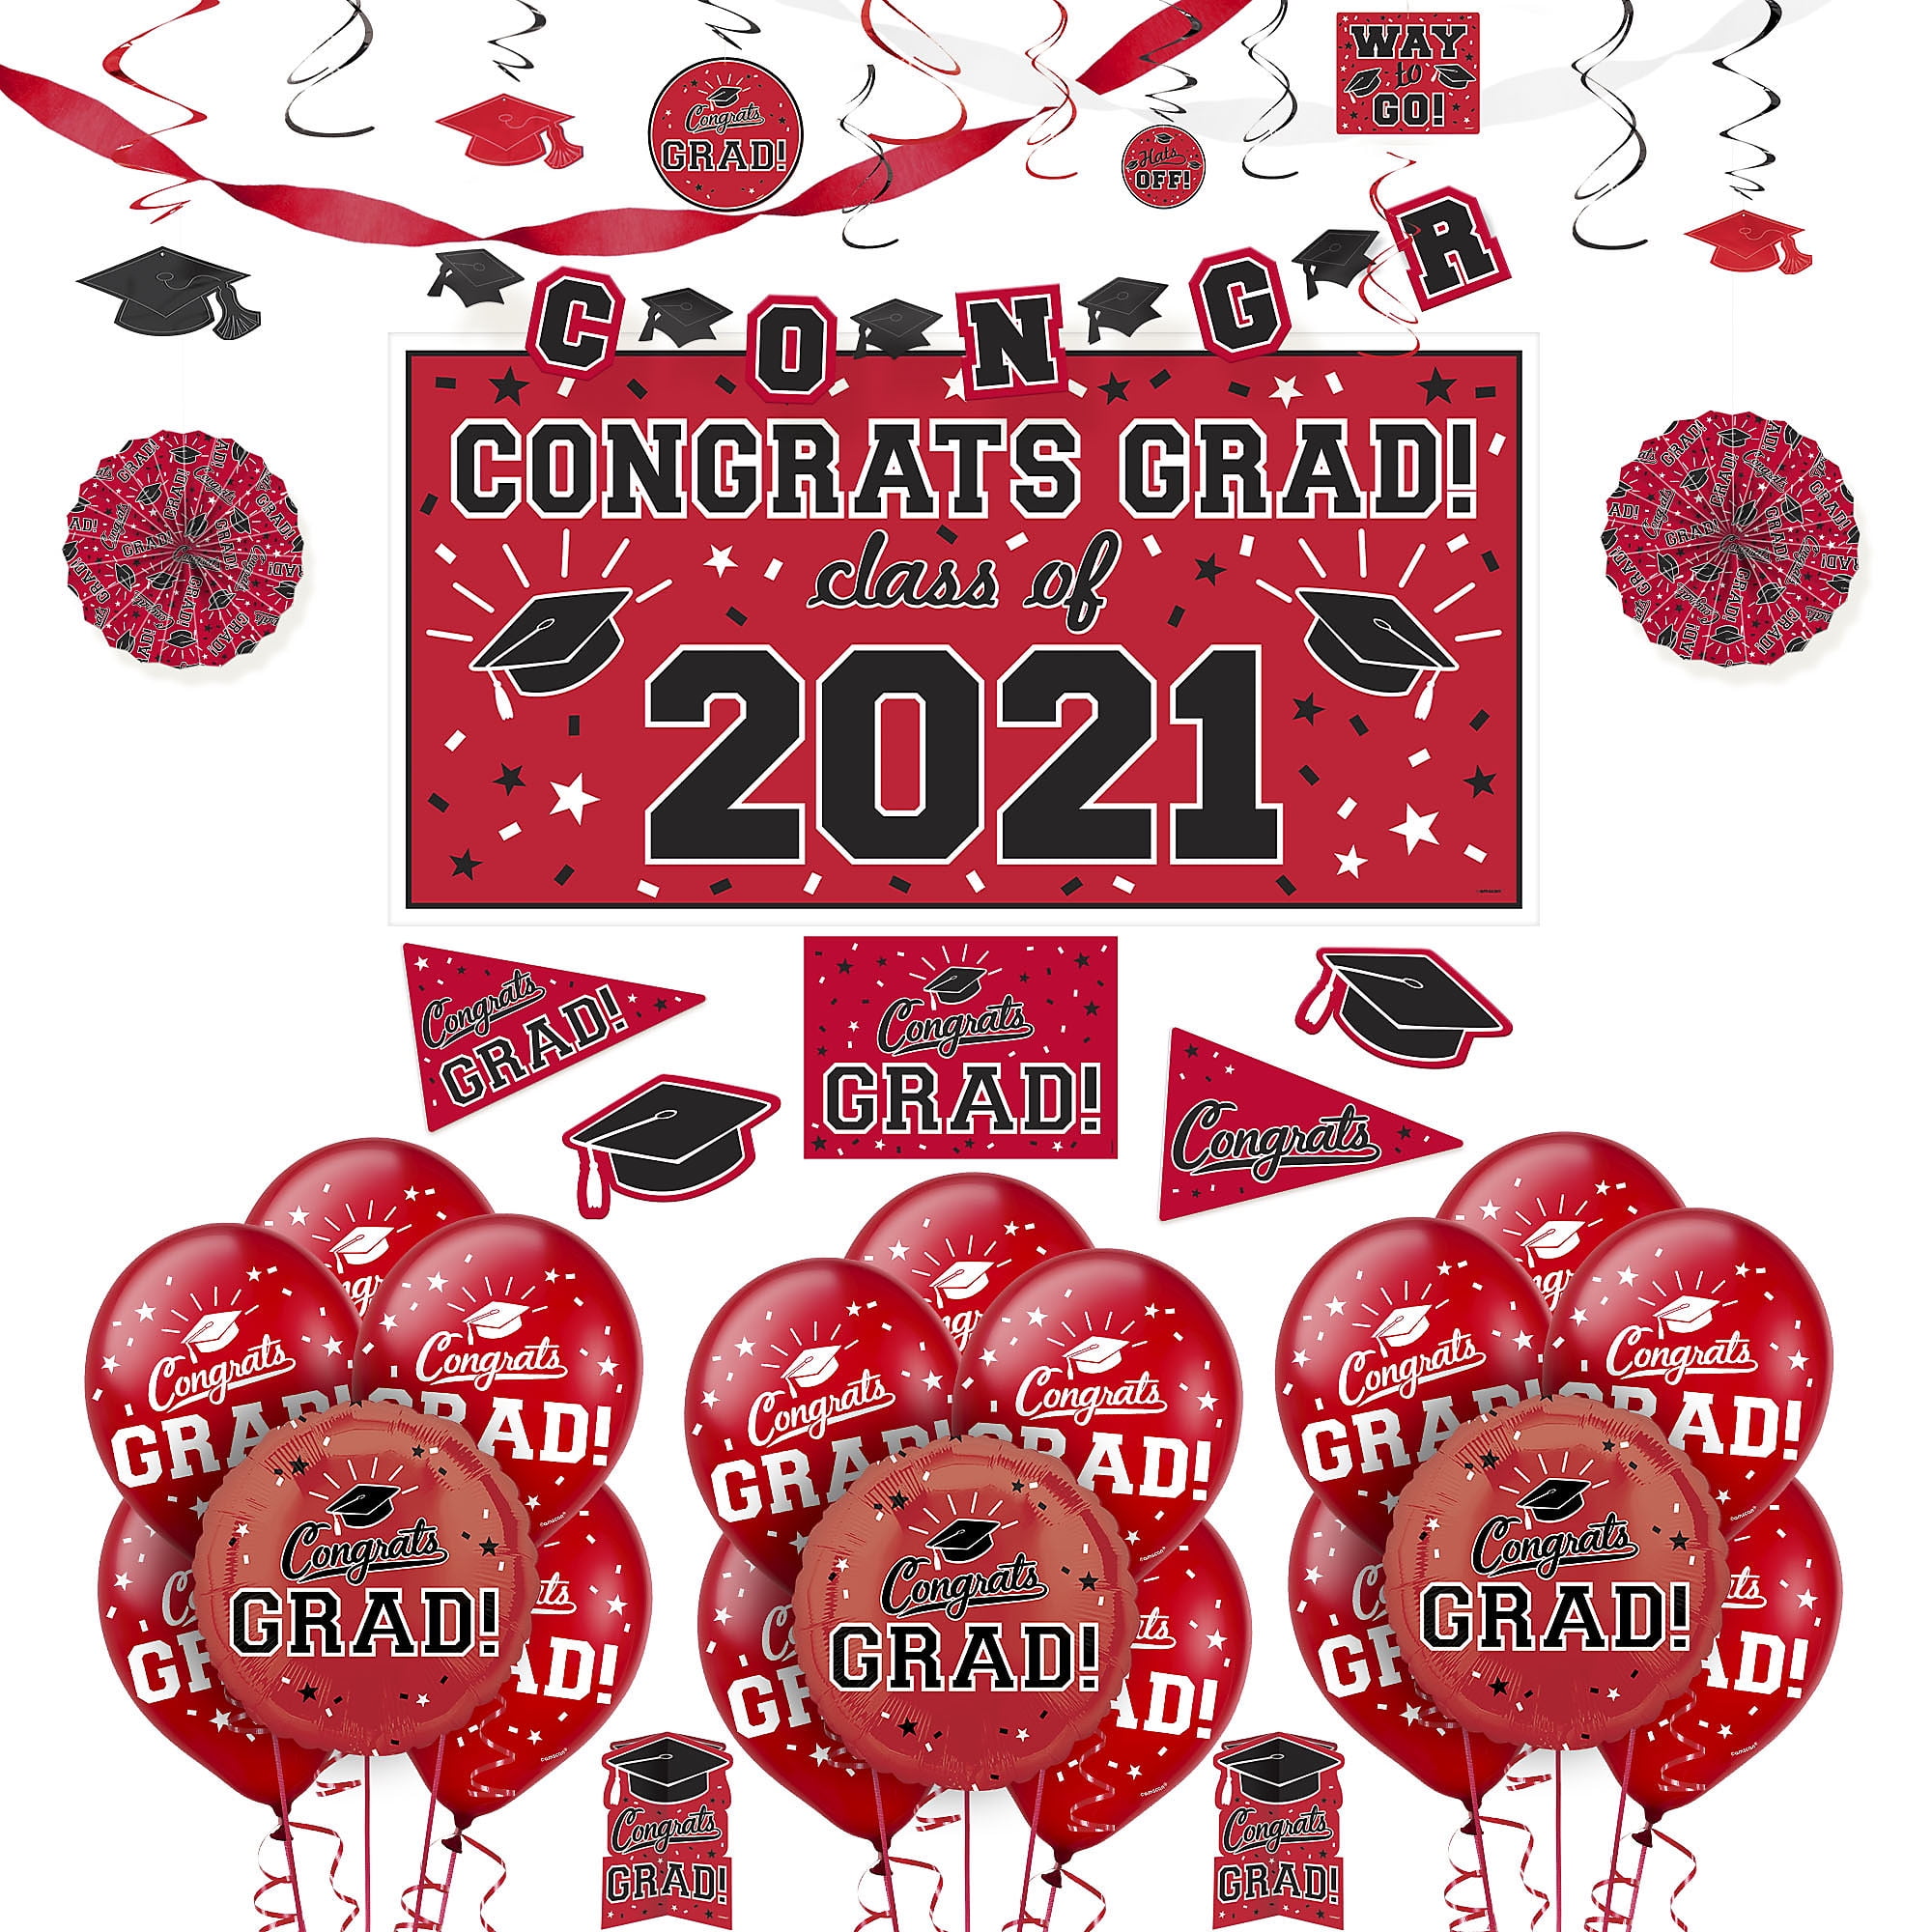 Details about   2021 Graduation Party Supplies Tableware Set Congrats Grad Class of 2021 Dinner